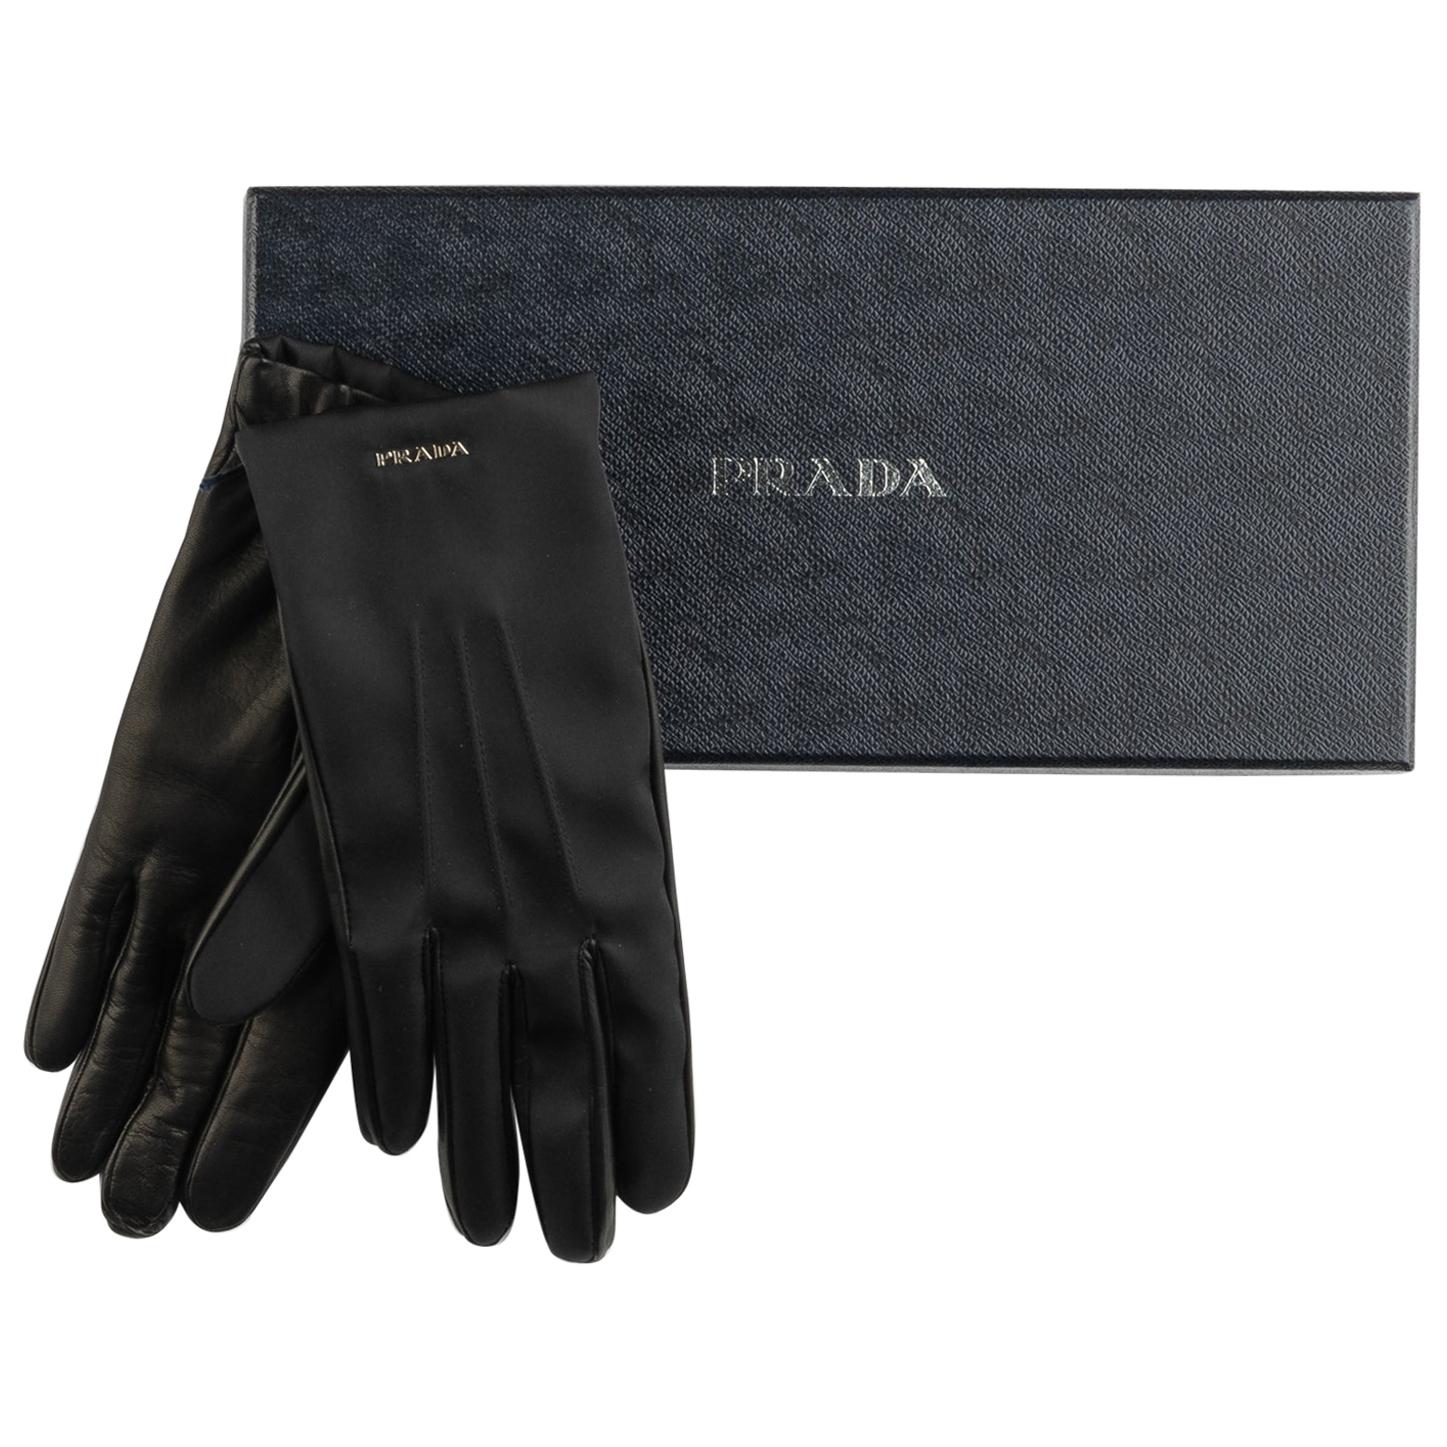 New in Box Prada Black Leather Ladies Gloves Size 6.5